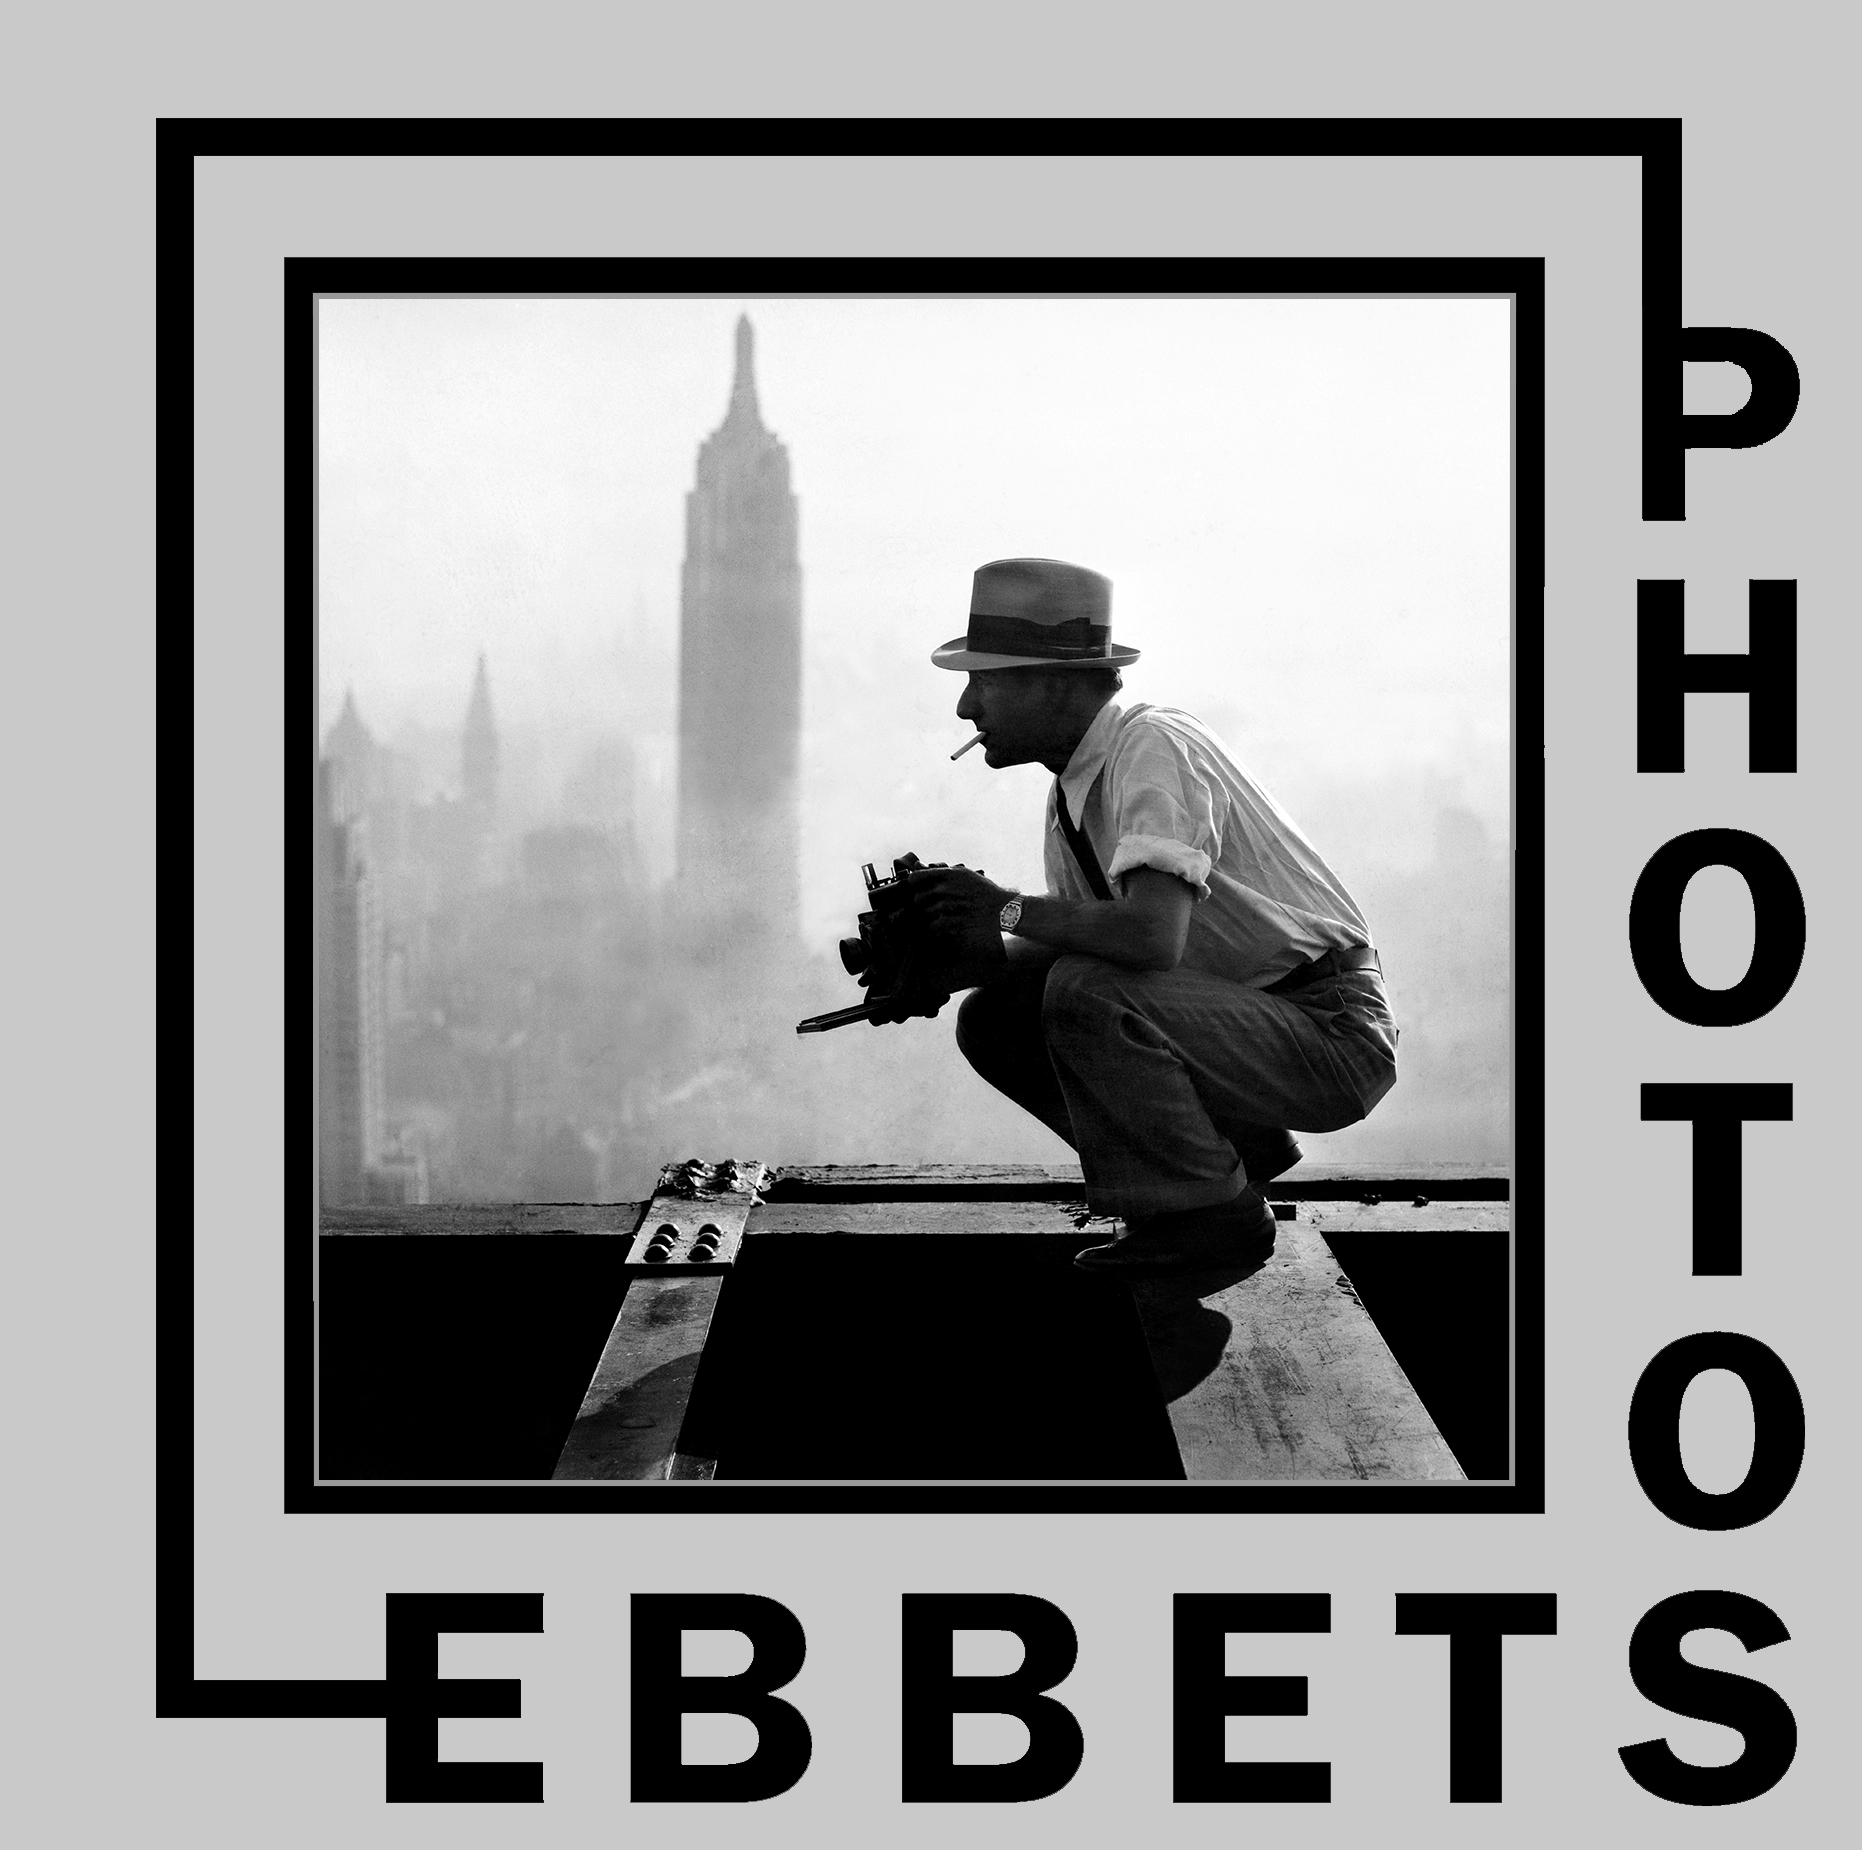 EBBETS PHOTOS logo, 8x8 square black letters and frame, no border